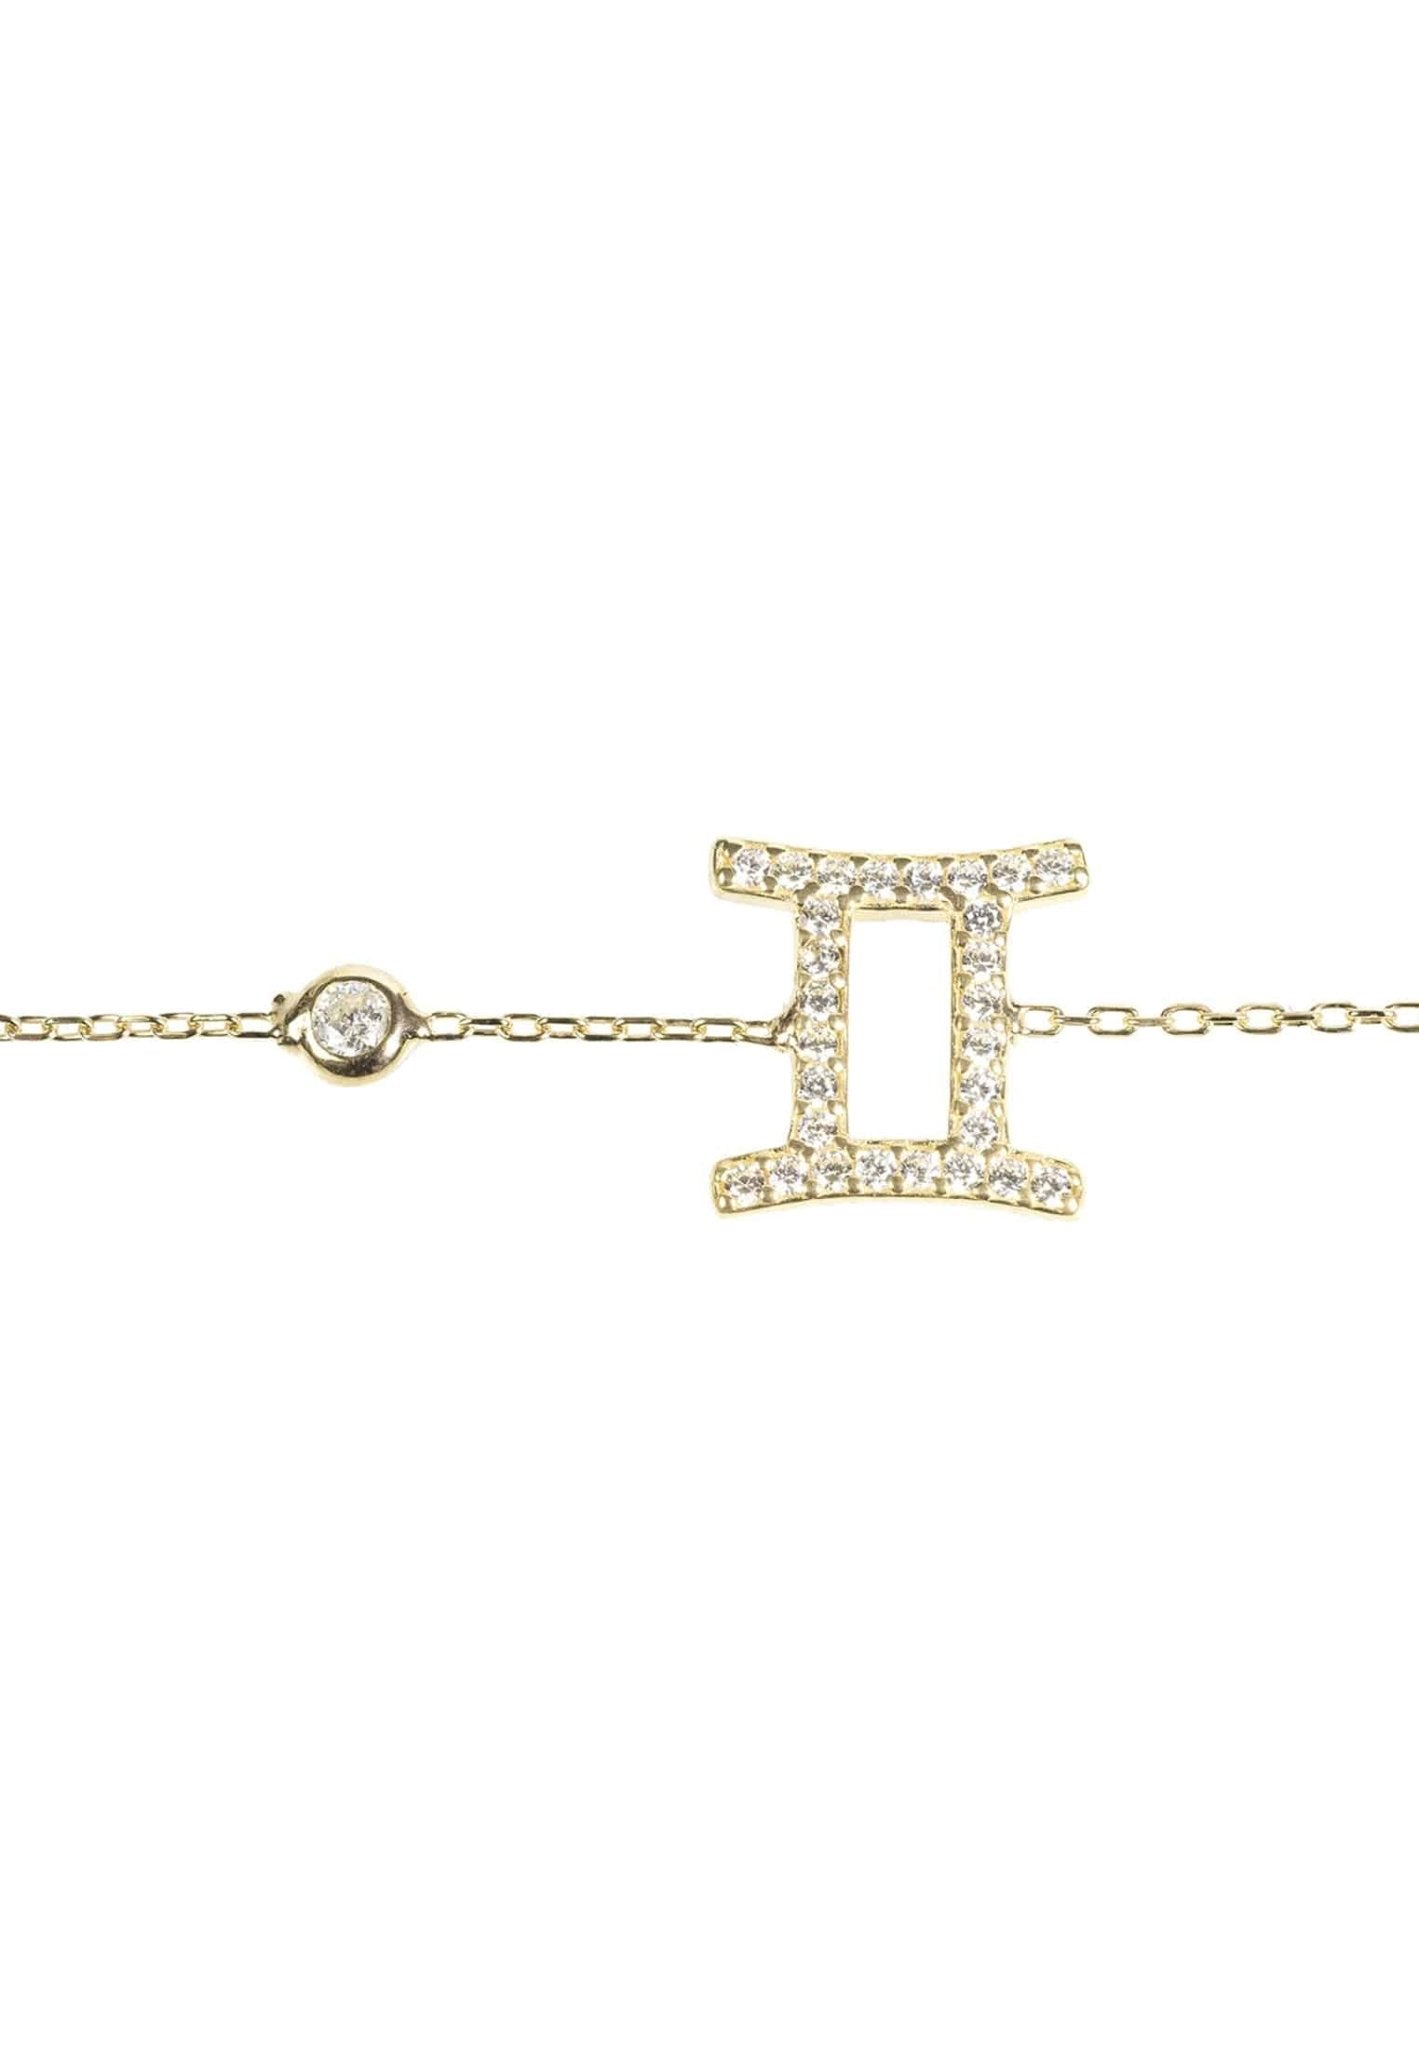 Zodiac Horoscope Star Sign Bracelet Gemini - LATELITA Bracelets